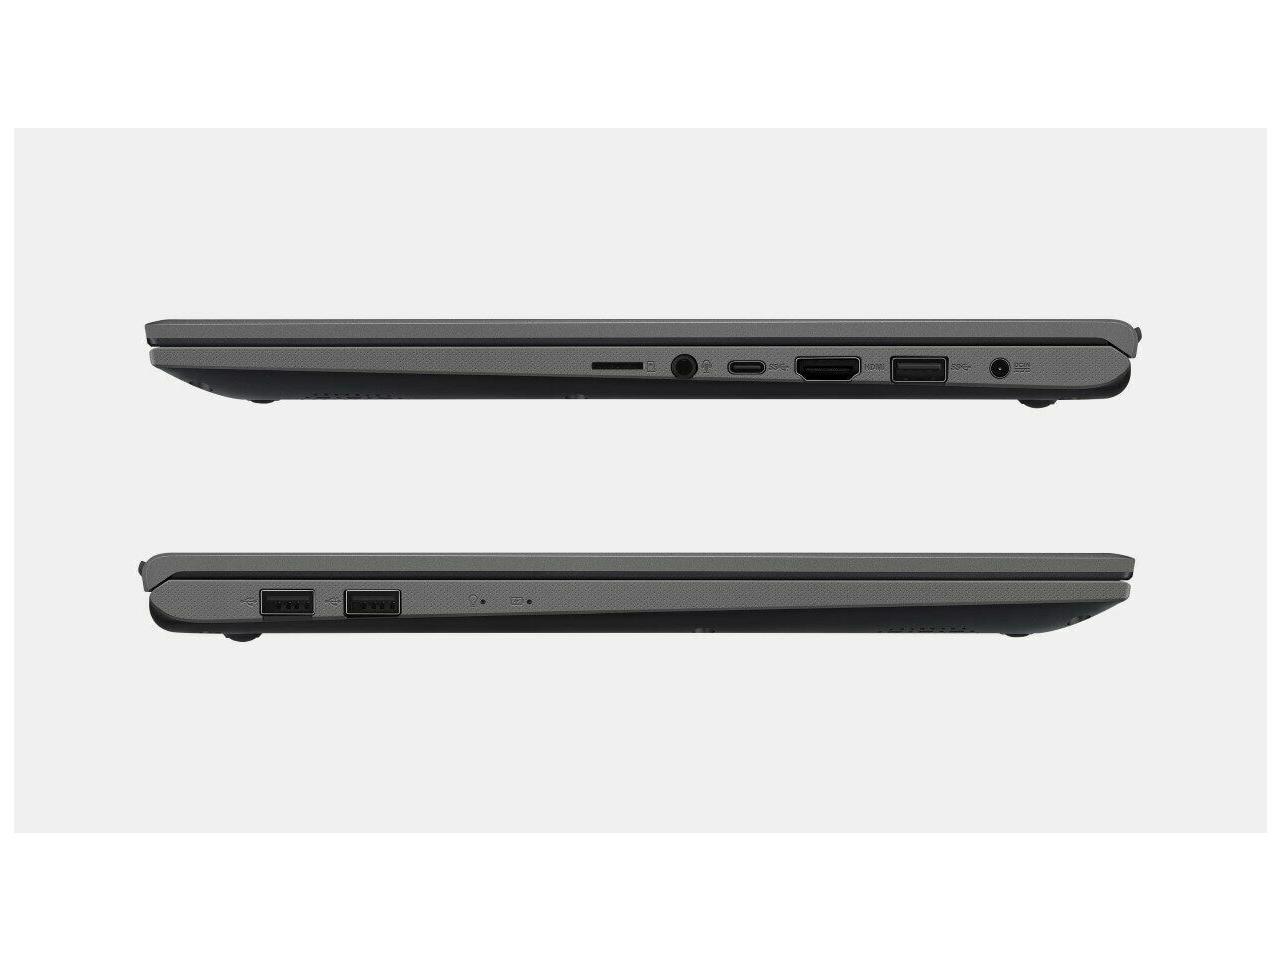 Newest Asus VivoBook 15 R564DA-UH72T 15.6" FHD Touchscreen Premium Laptop, AMD Ryzen 7 3700U, 12GB RAM, 512GB PCIe SSD, Backlit Keyboard, Fingerprint Reader, Windows 10 Home, Gray